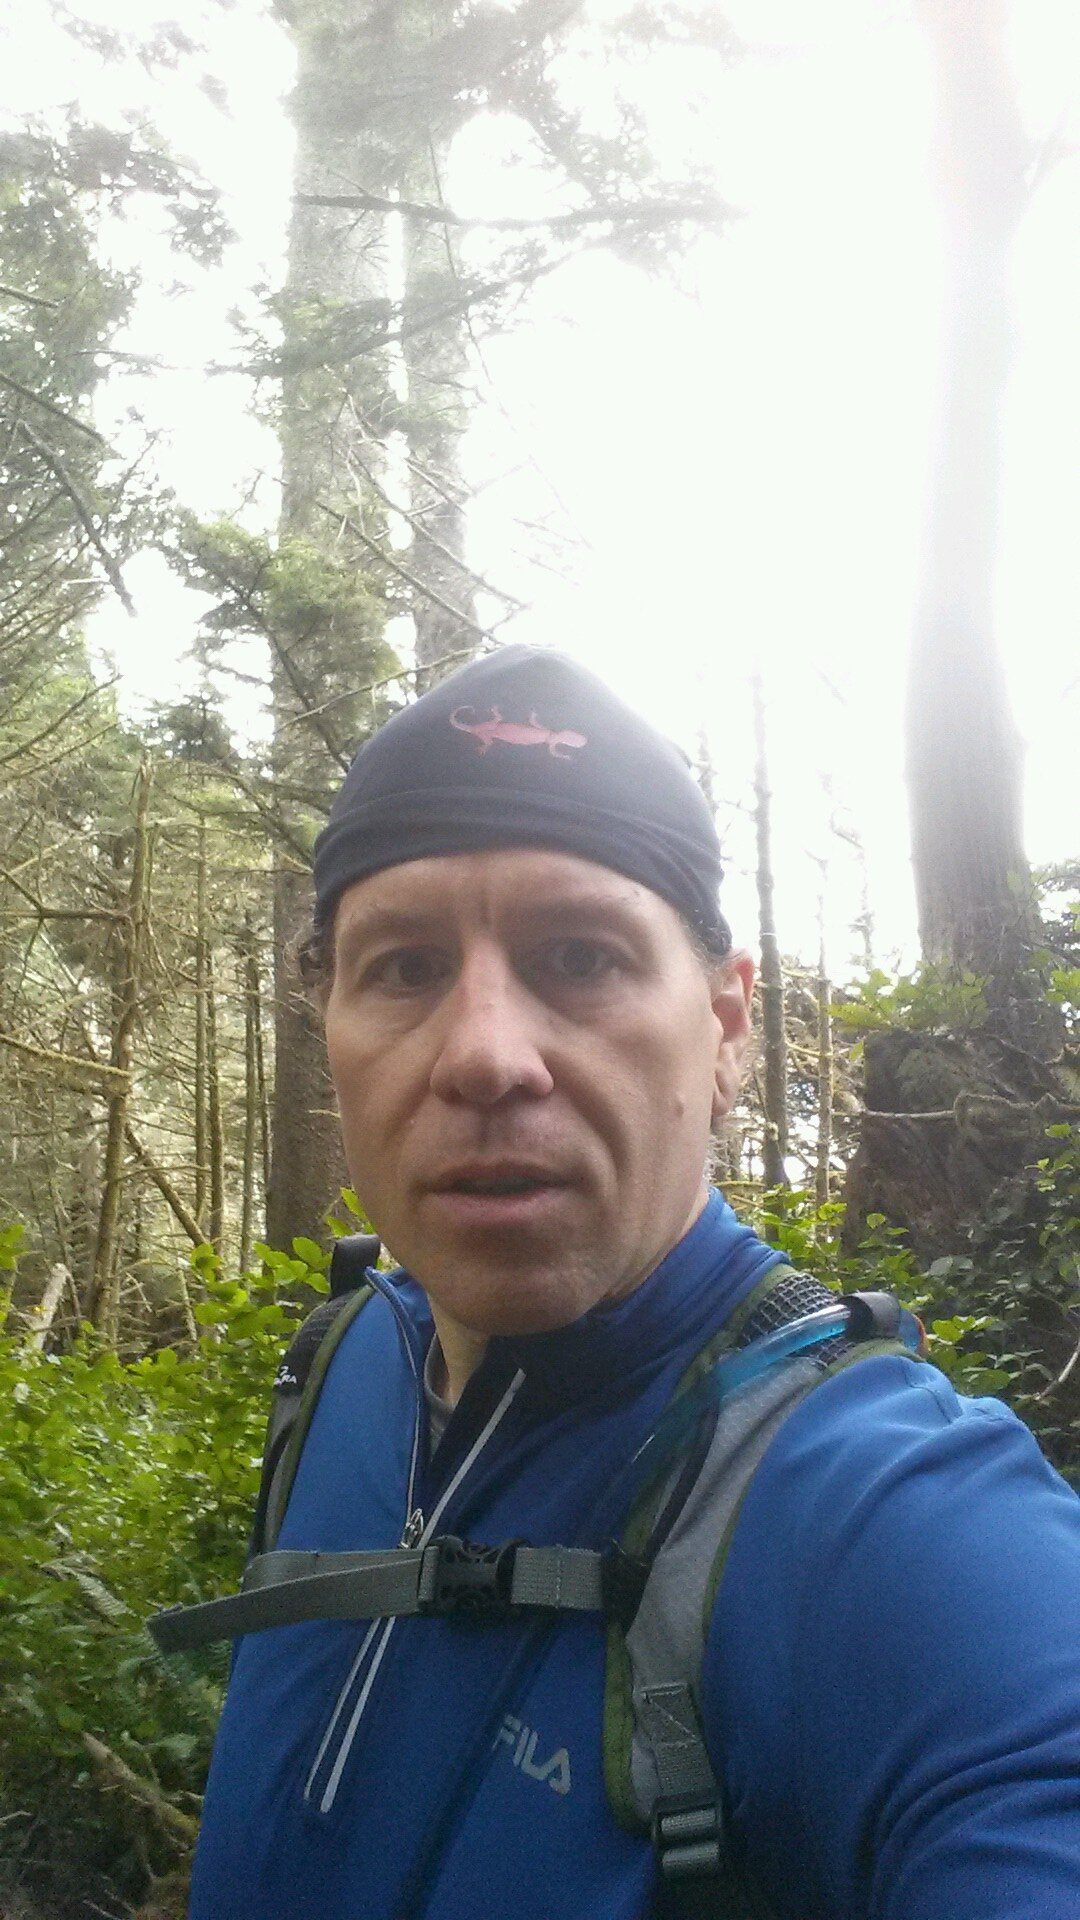 Technology Consultant, Trail Runner